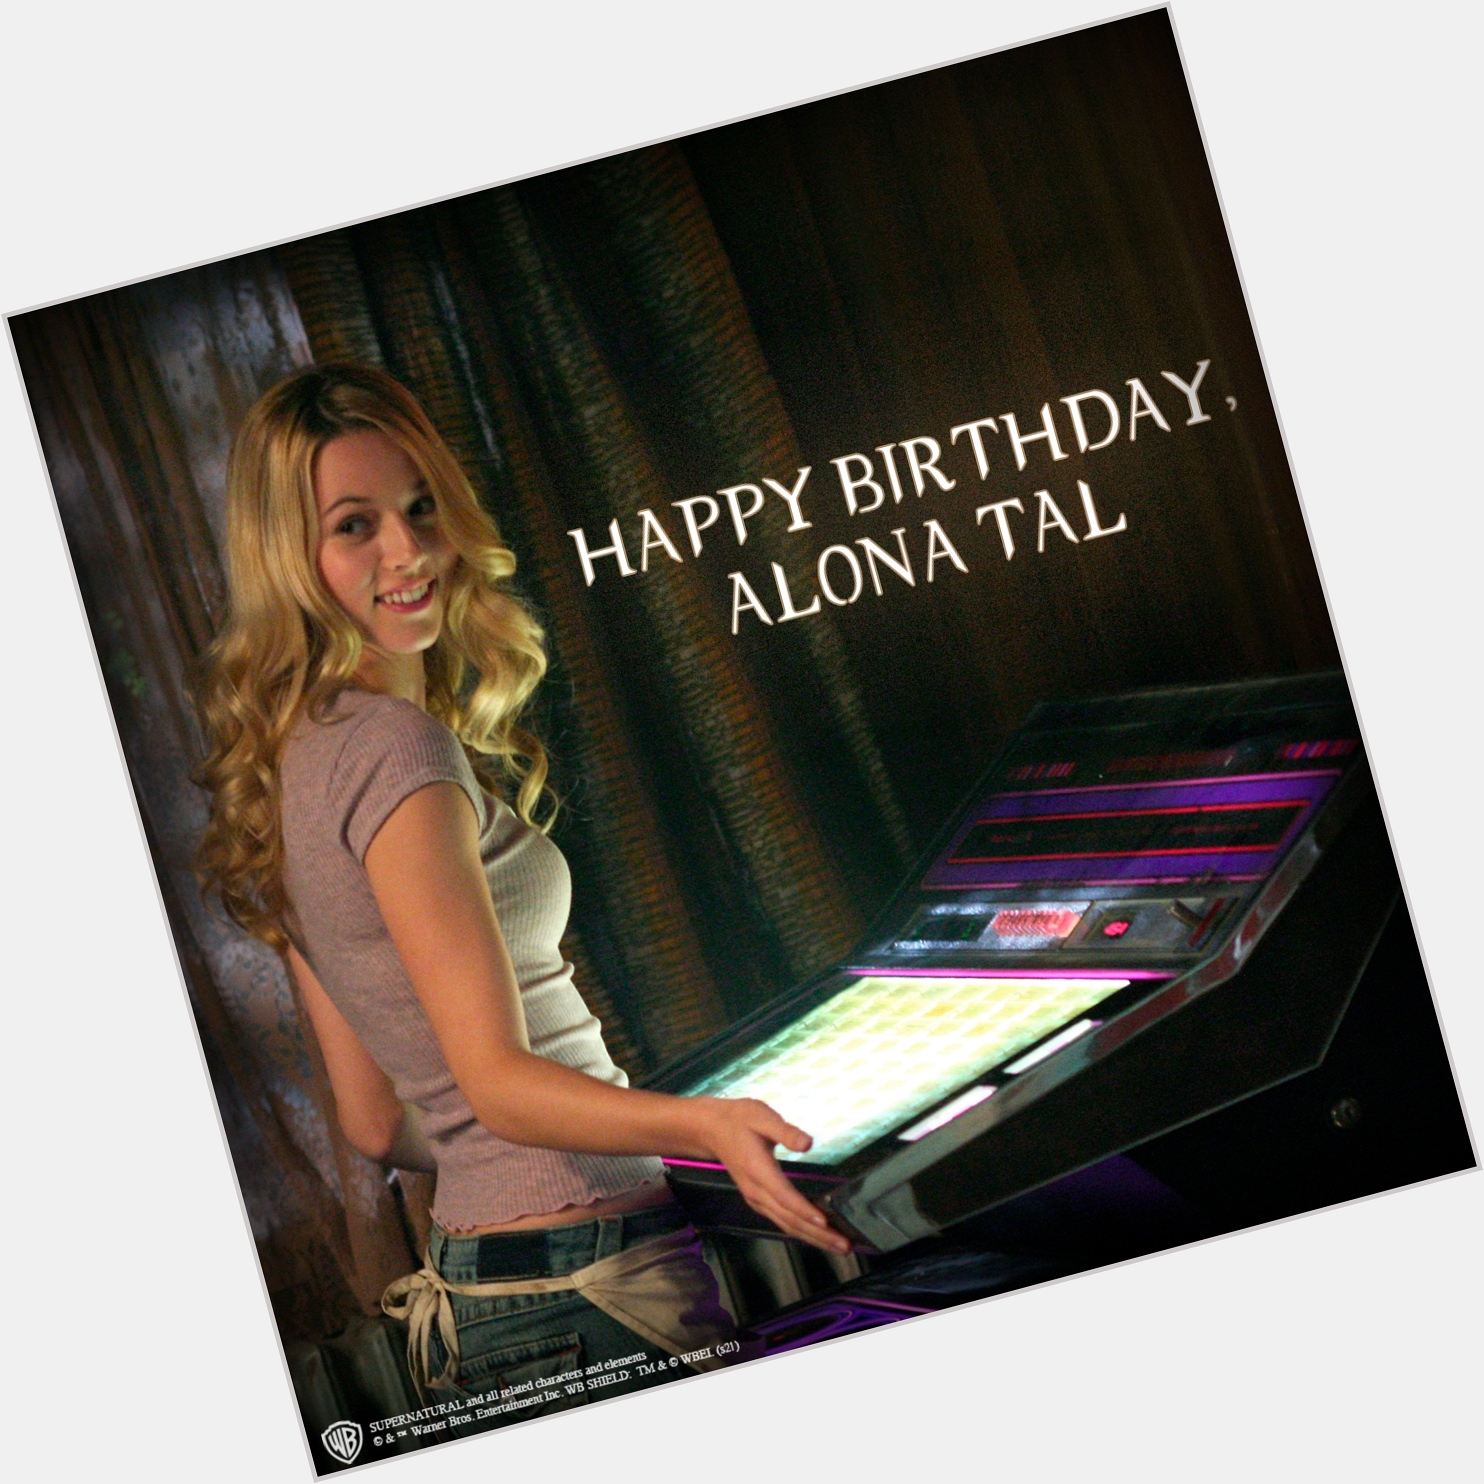 Everyone wish Alona Tal a big happy birthday! 